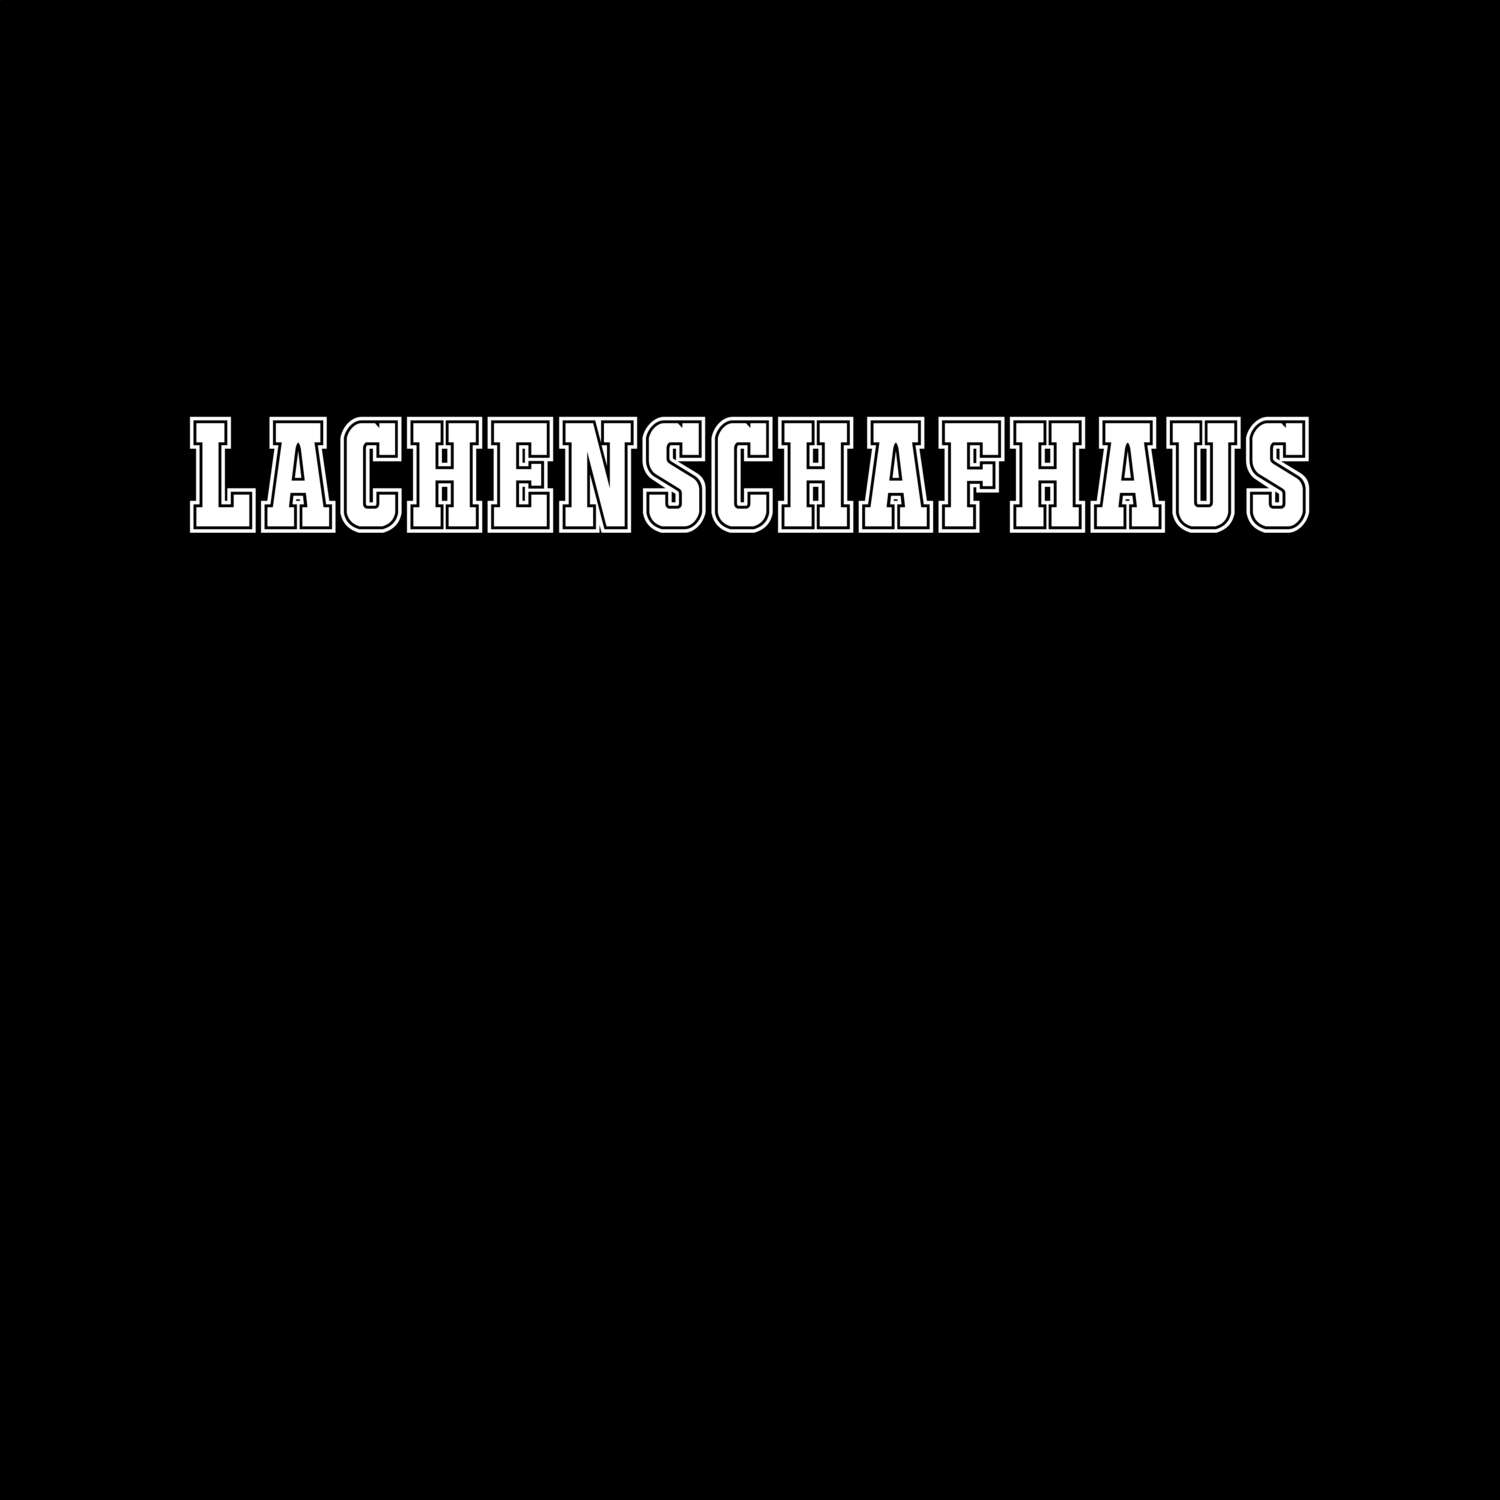 Lachenschafhaus T-Shirt »Classic«